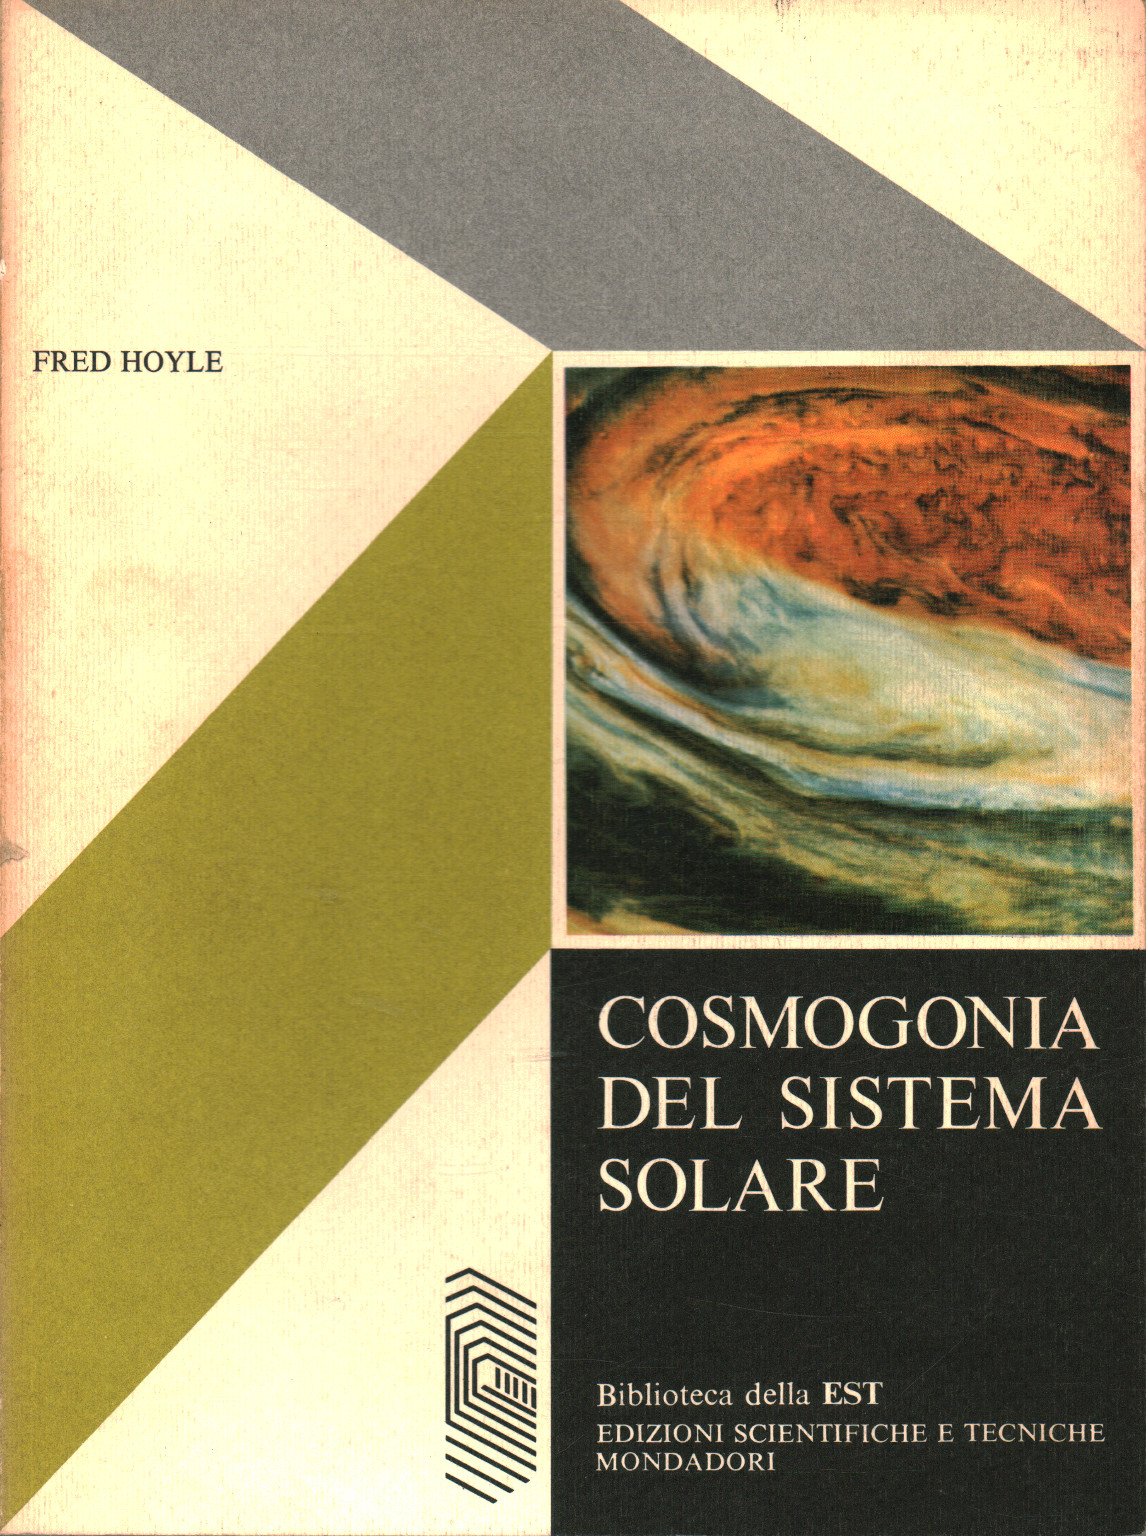 Cosmogonia del sistema solare, Fred Hoyle